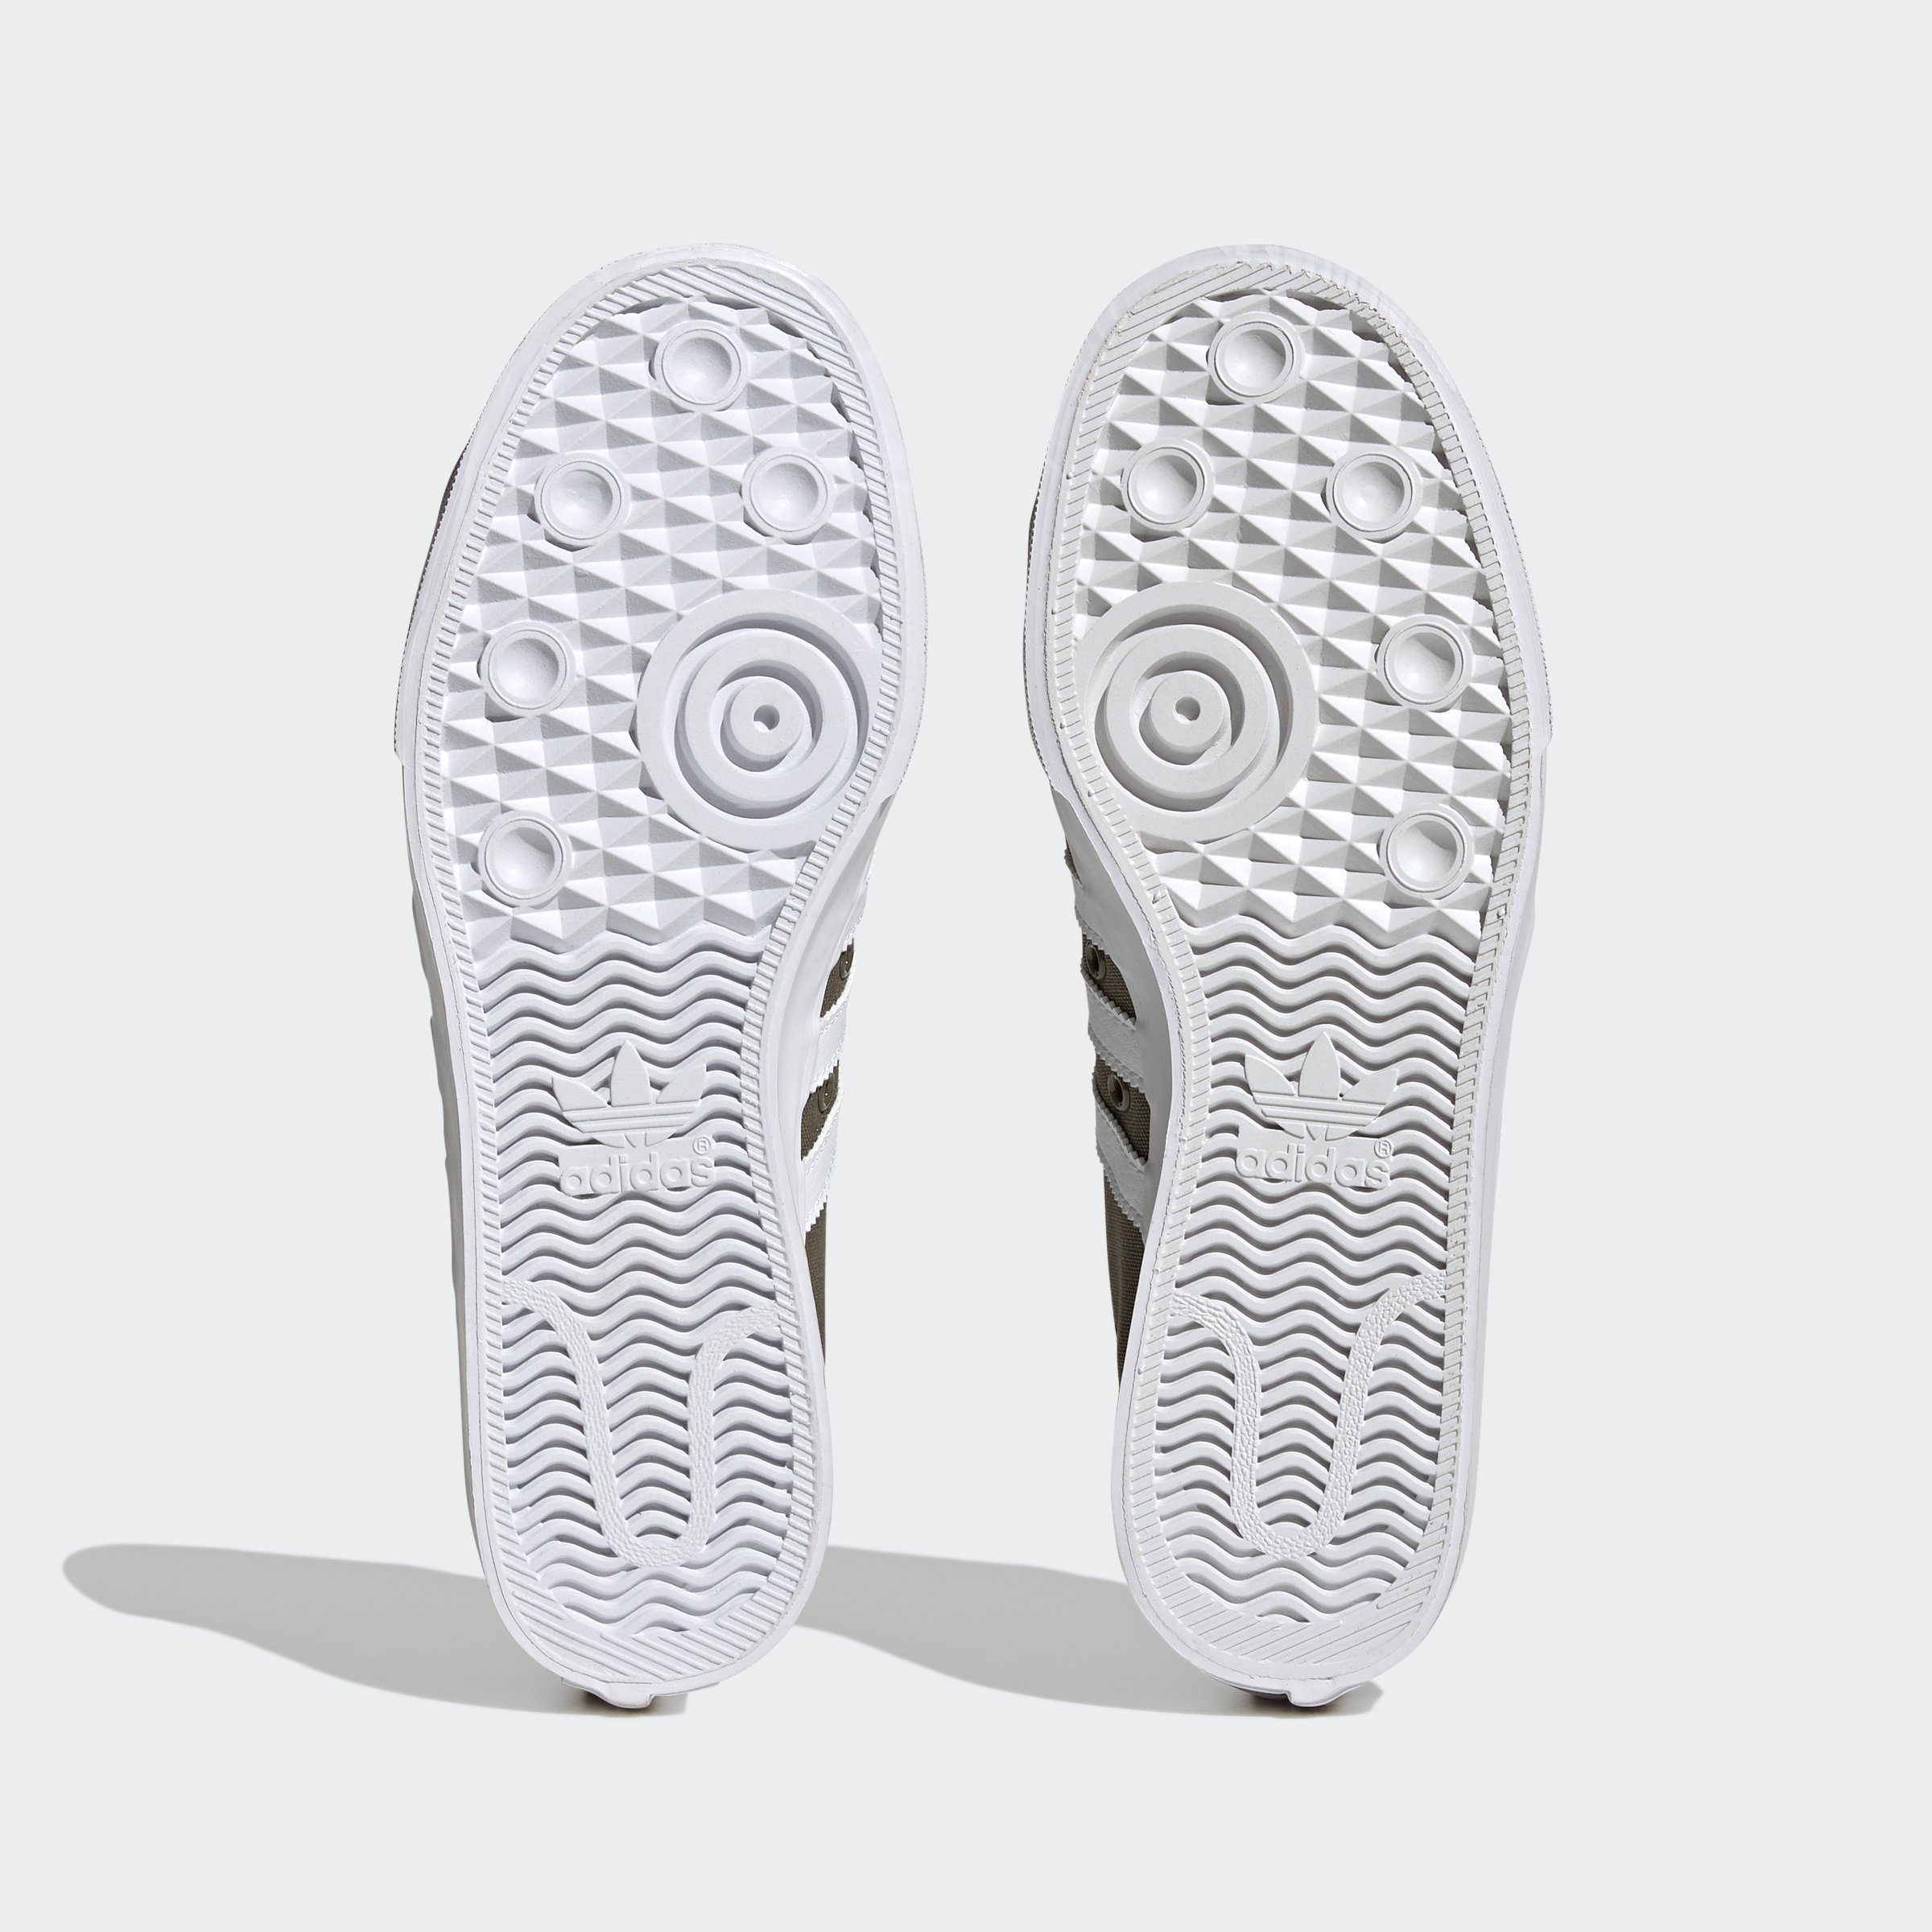 NIZZA Cloud White adidas / Originals White / Sneaker Olive Strata Cloud